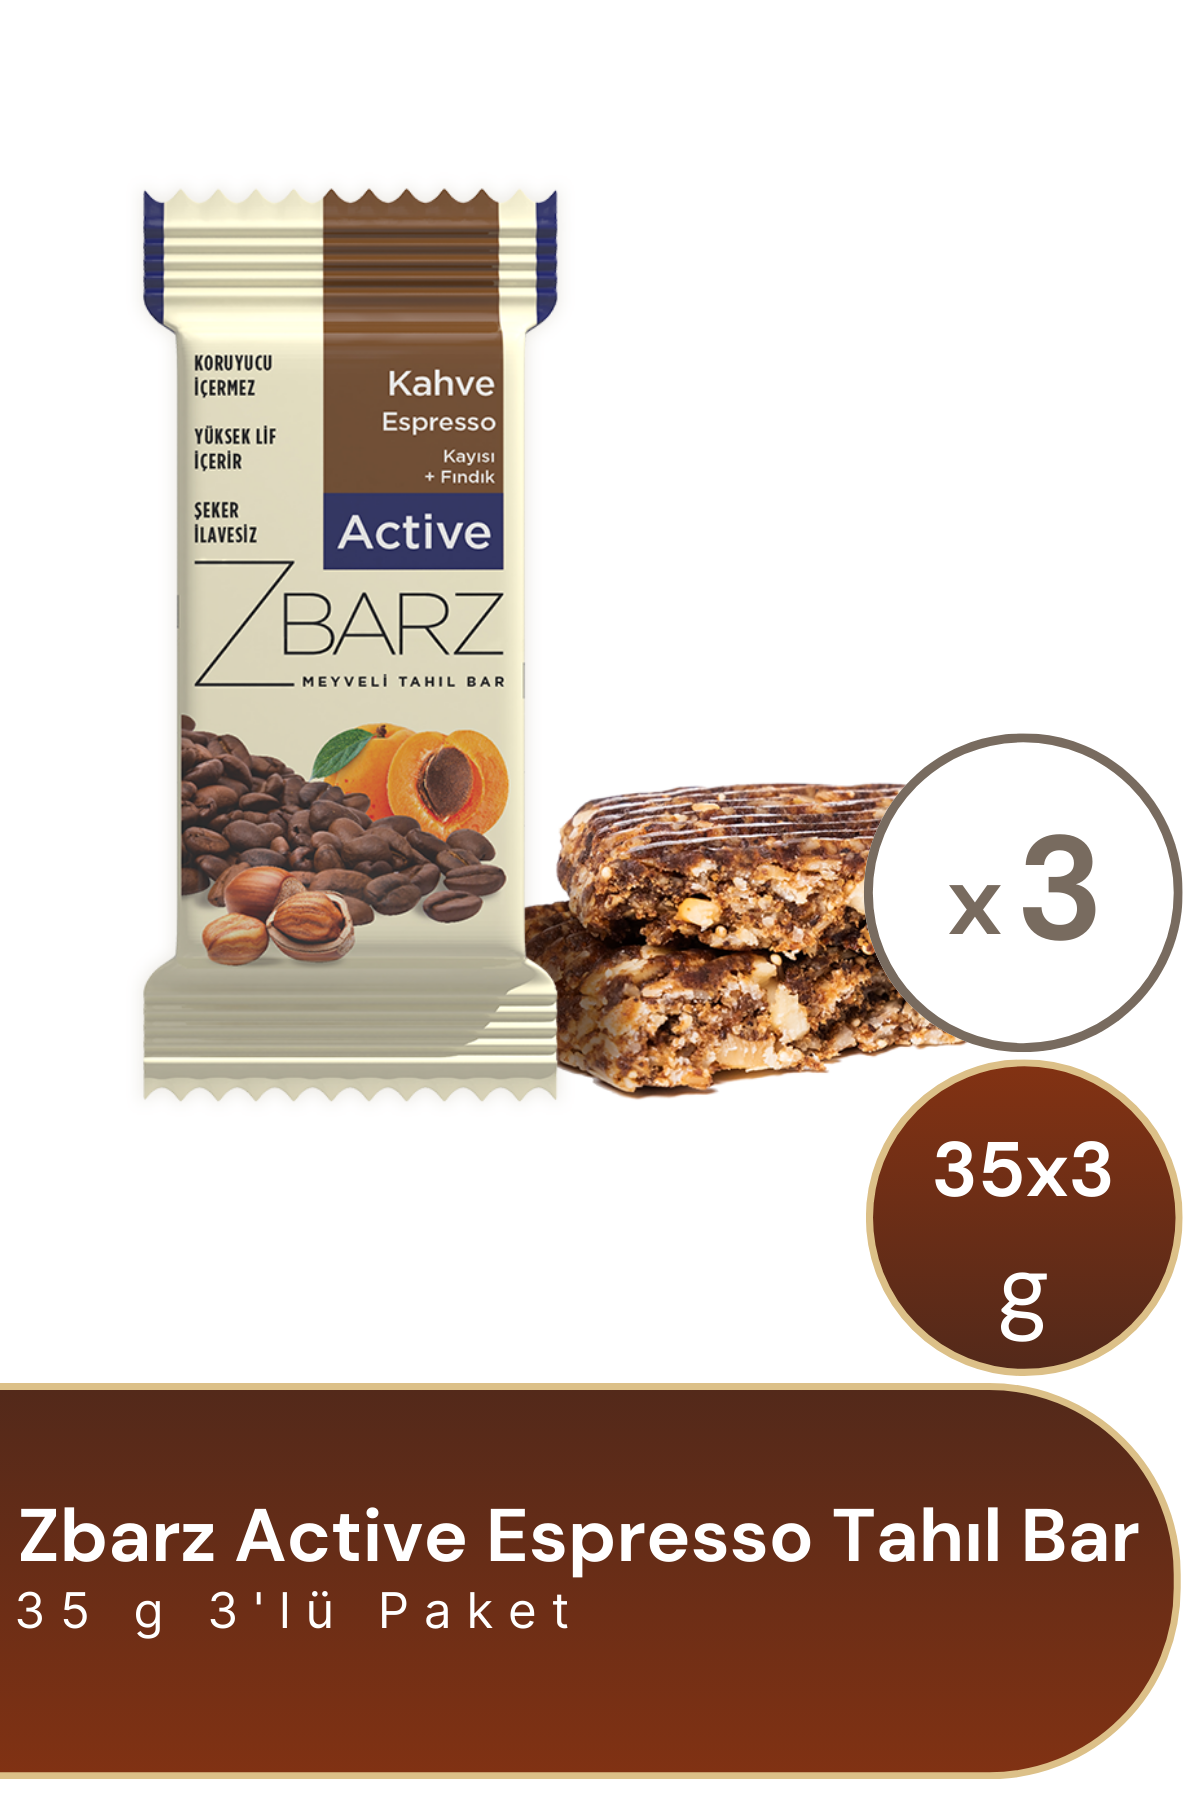 Zbarz Active Espresso Tahıl Bar 35 g 3'lü Paket